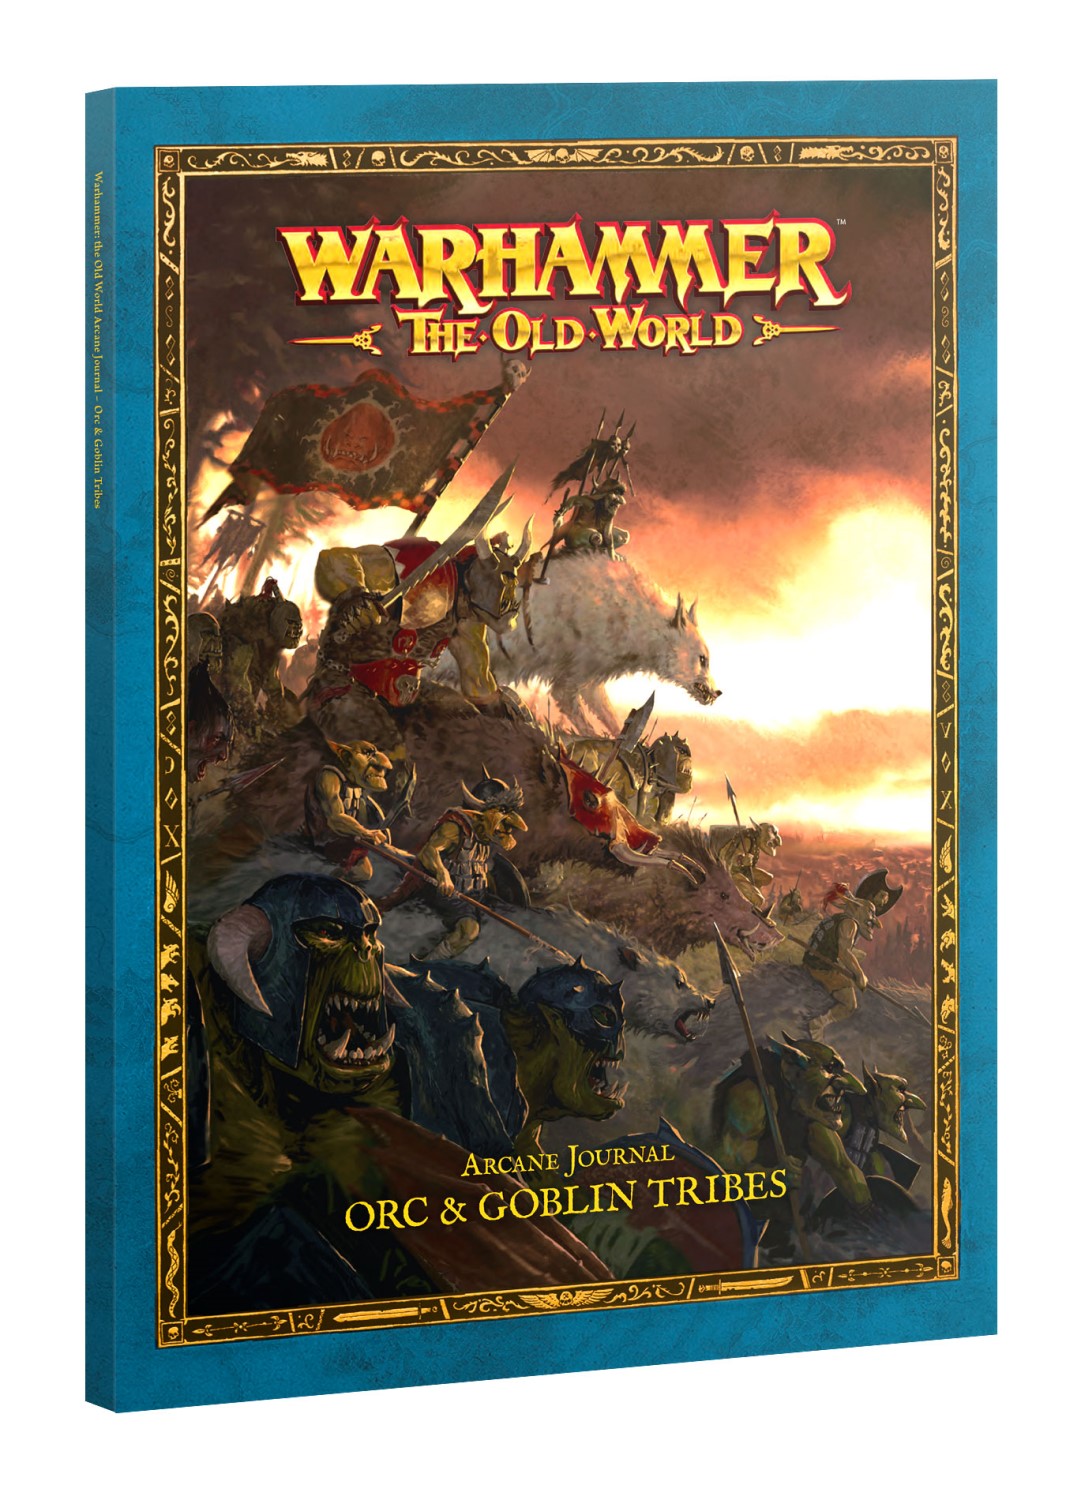 Warhammer: The Old World Arcane Journal : Orc and Goblin Tribes MKFZ21OWEG |0|